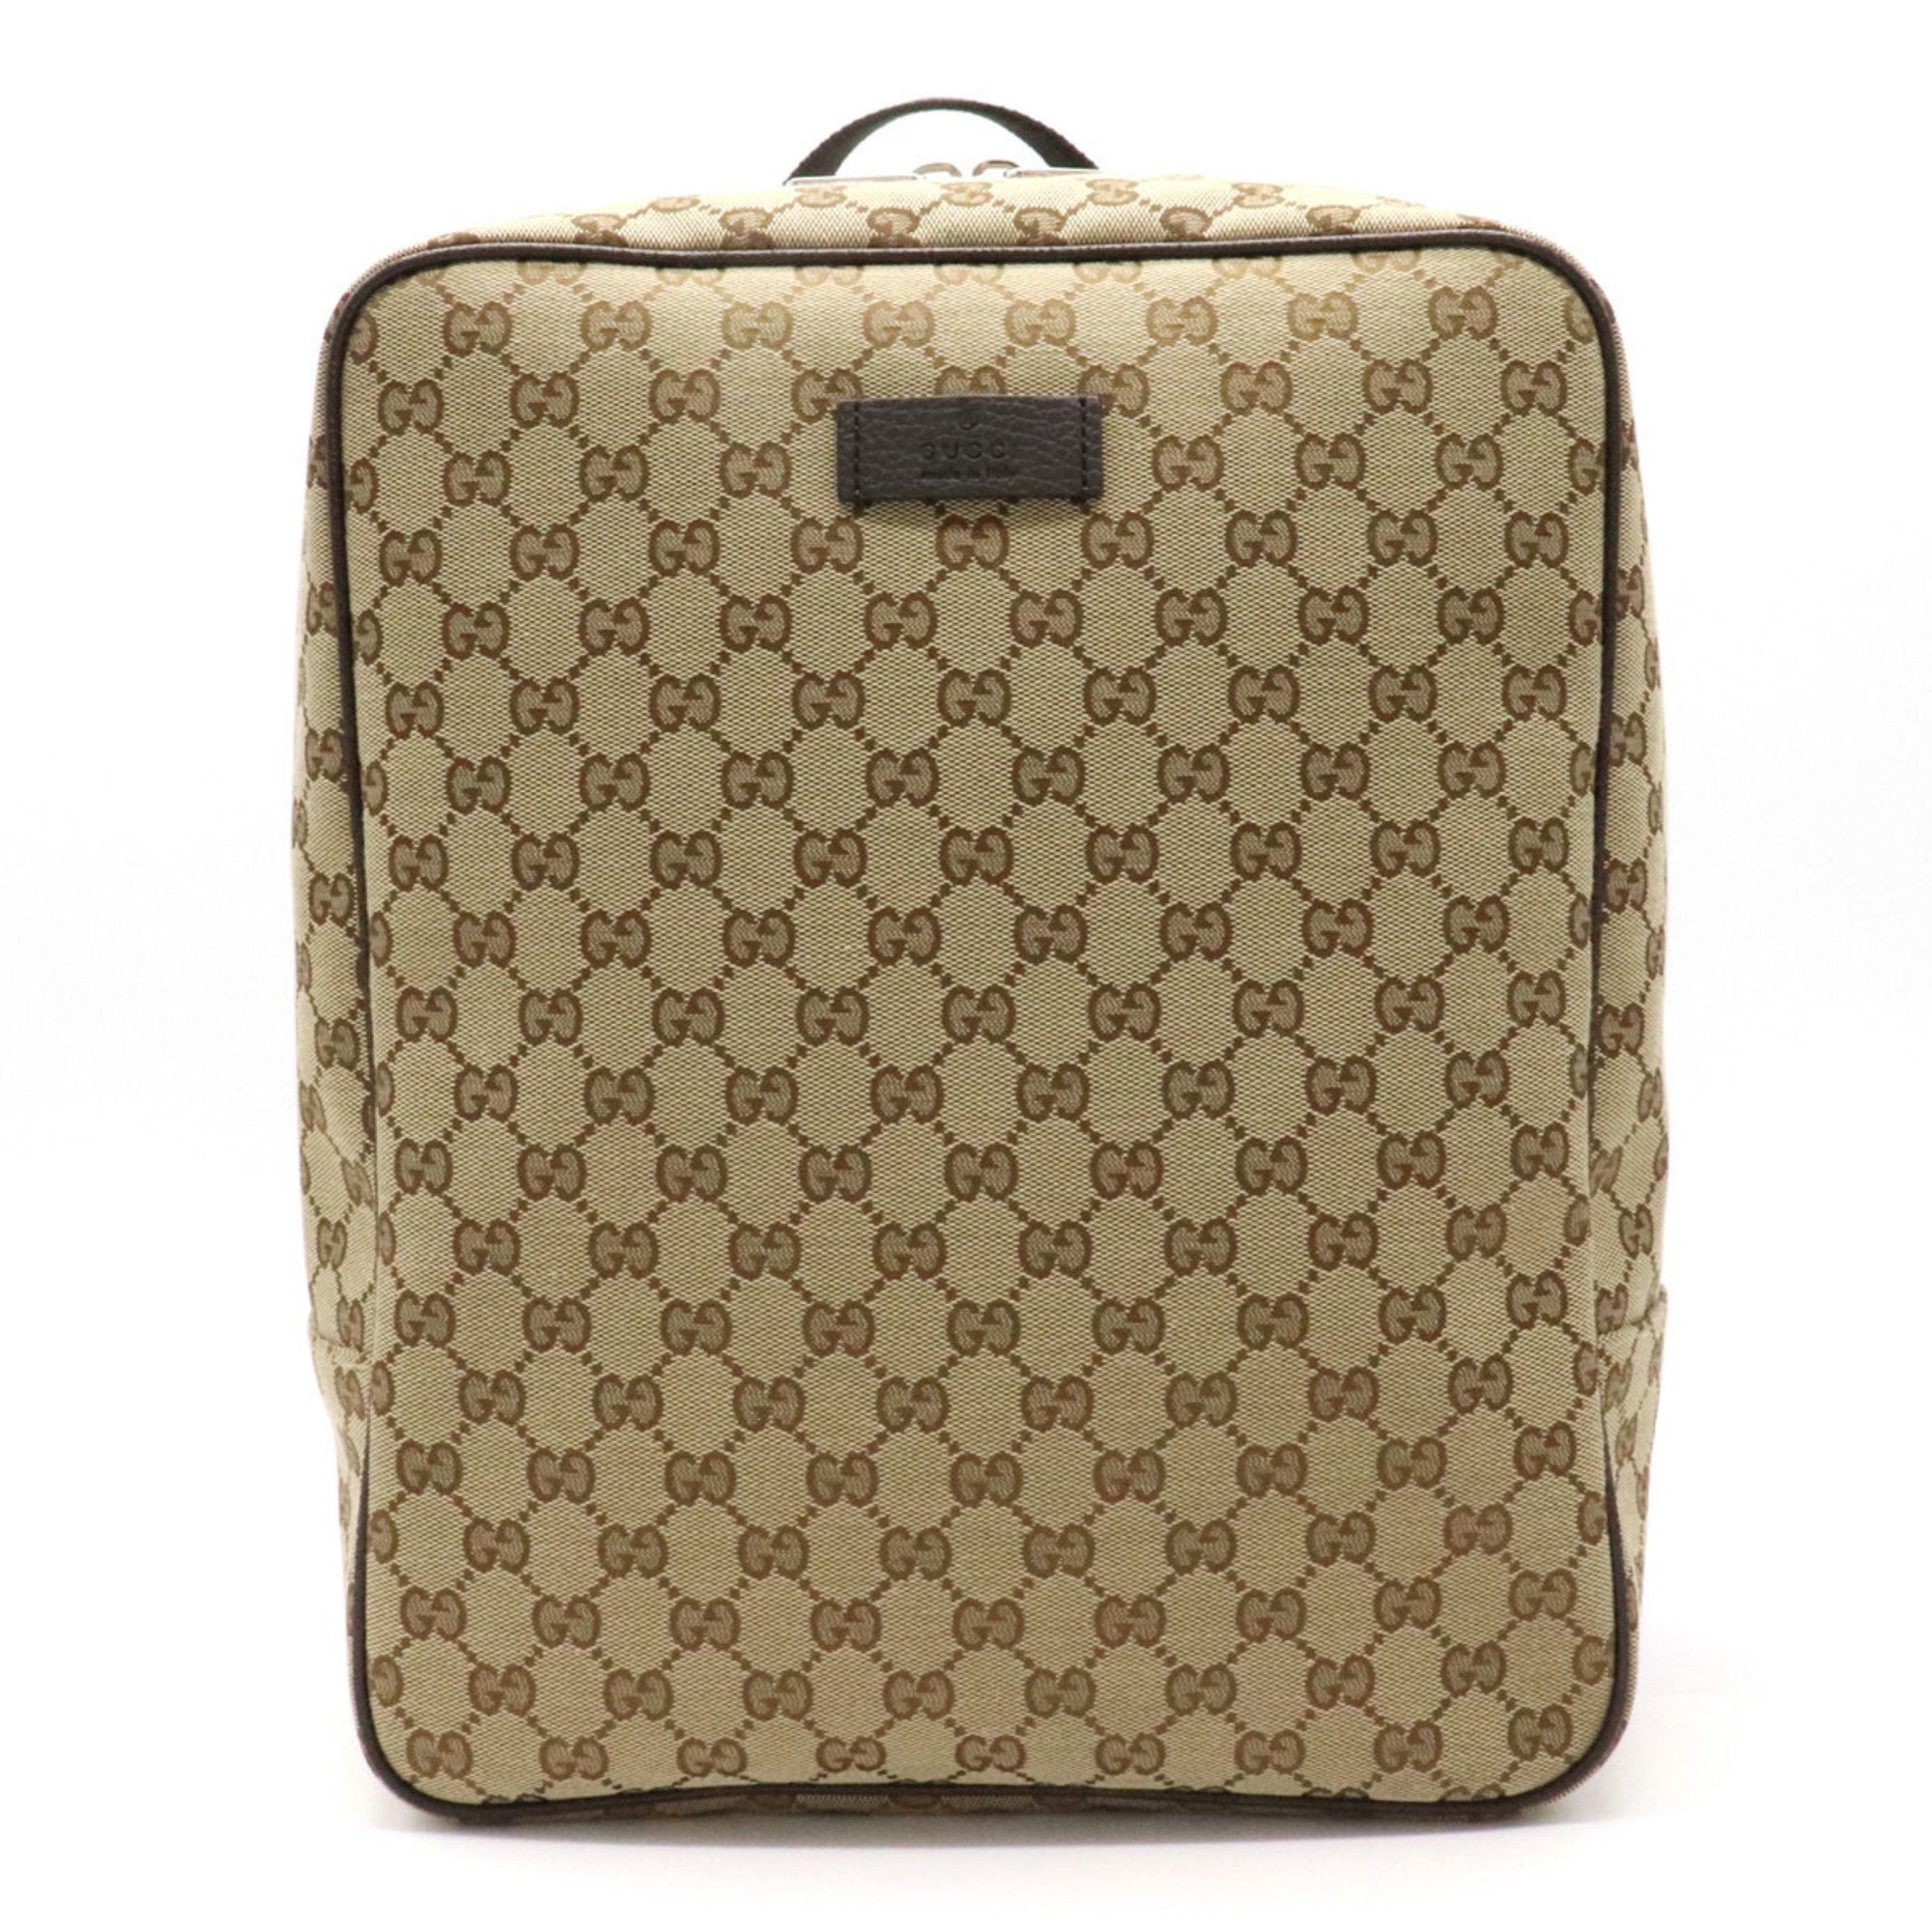 Gucci GG canvas rucksack backpack daypack leather khaki beige dark bro